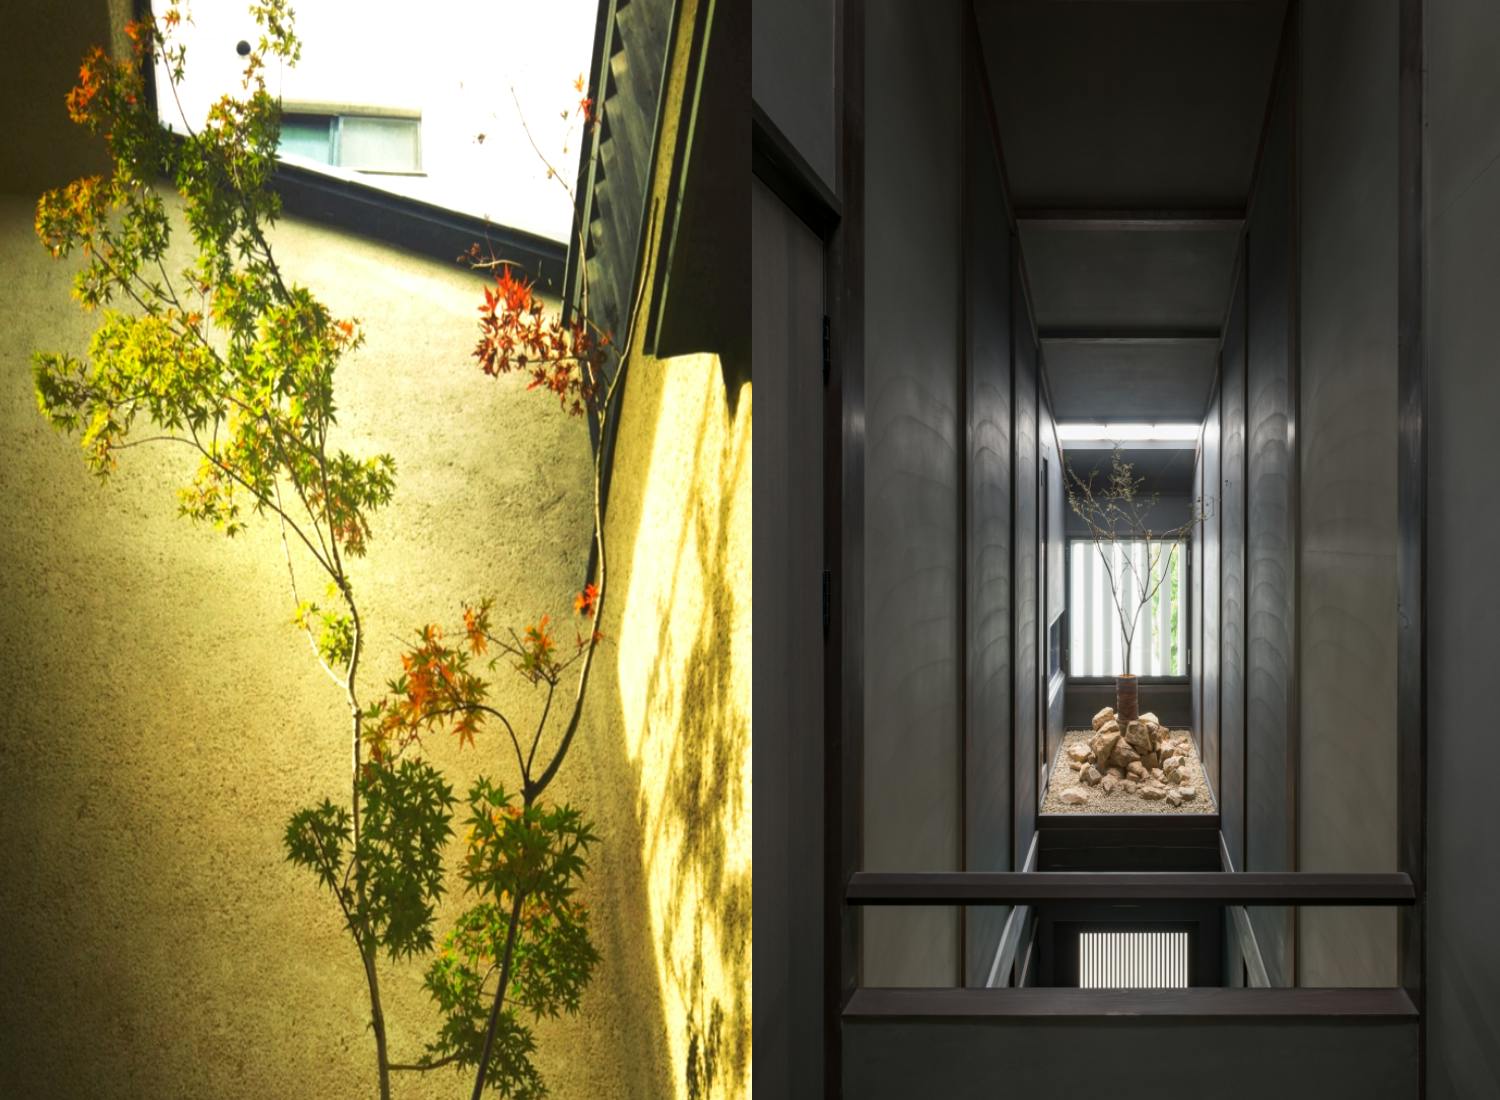 Kyoto Komatsu Residences - central garden and indoor garden installation by Replanter